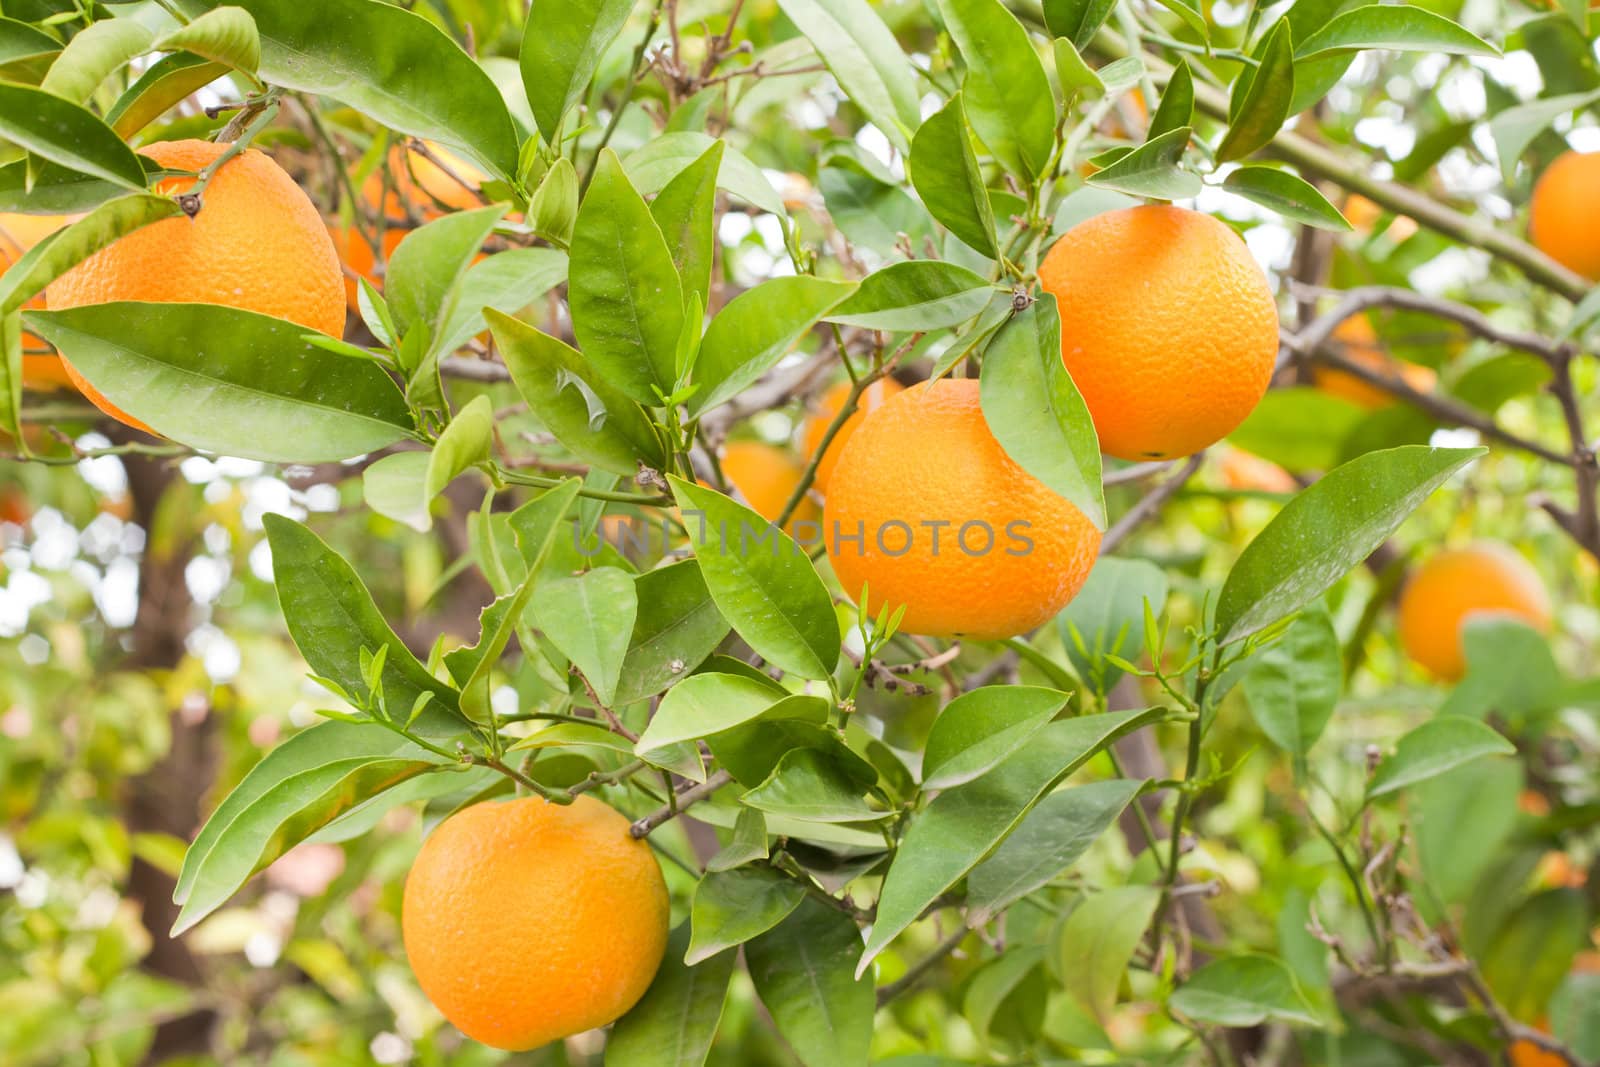 Ripe juicy oranges hanging heavily on branches of orange tree.